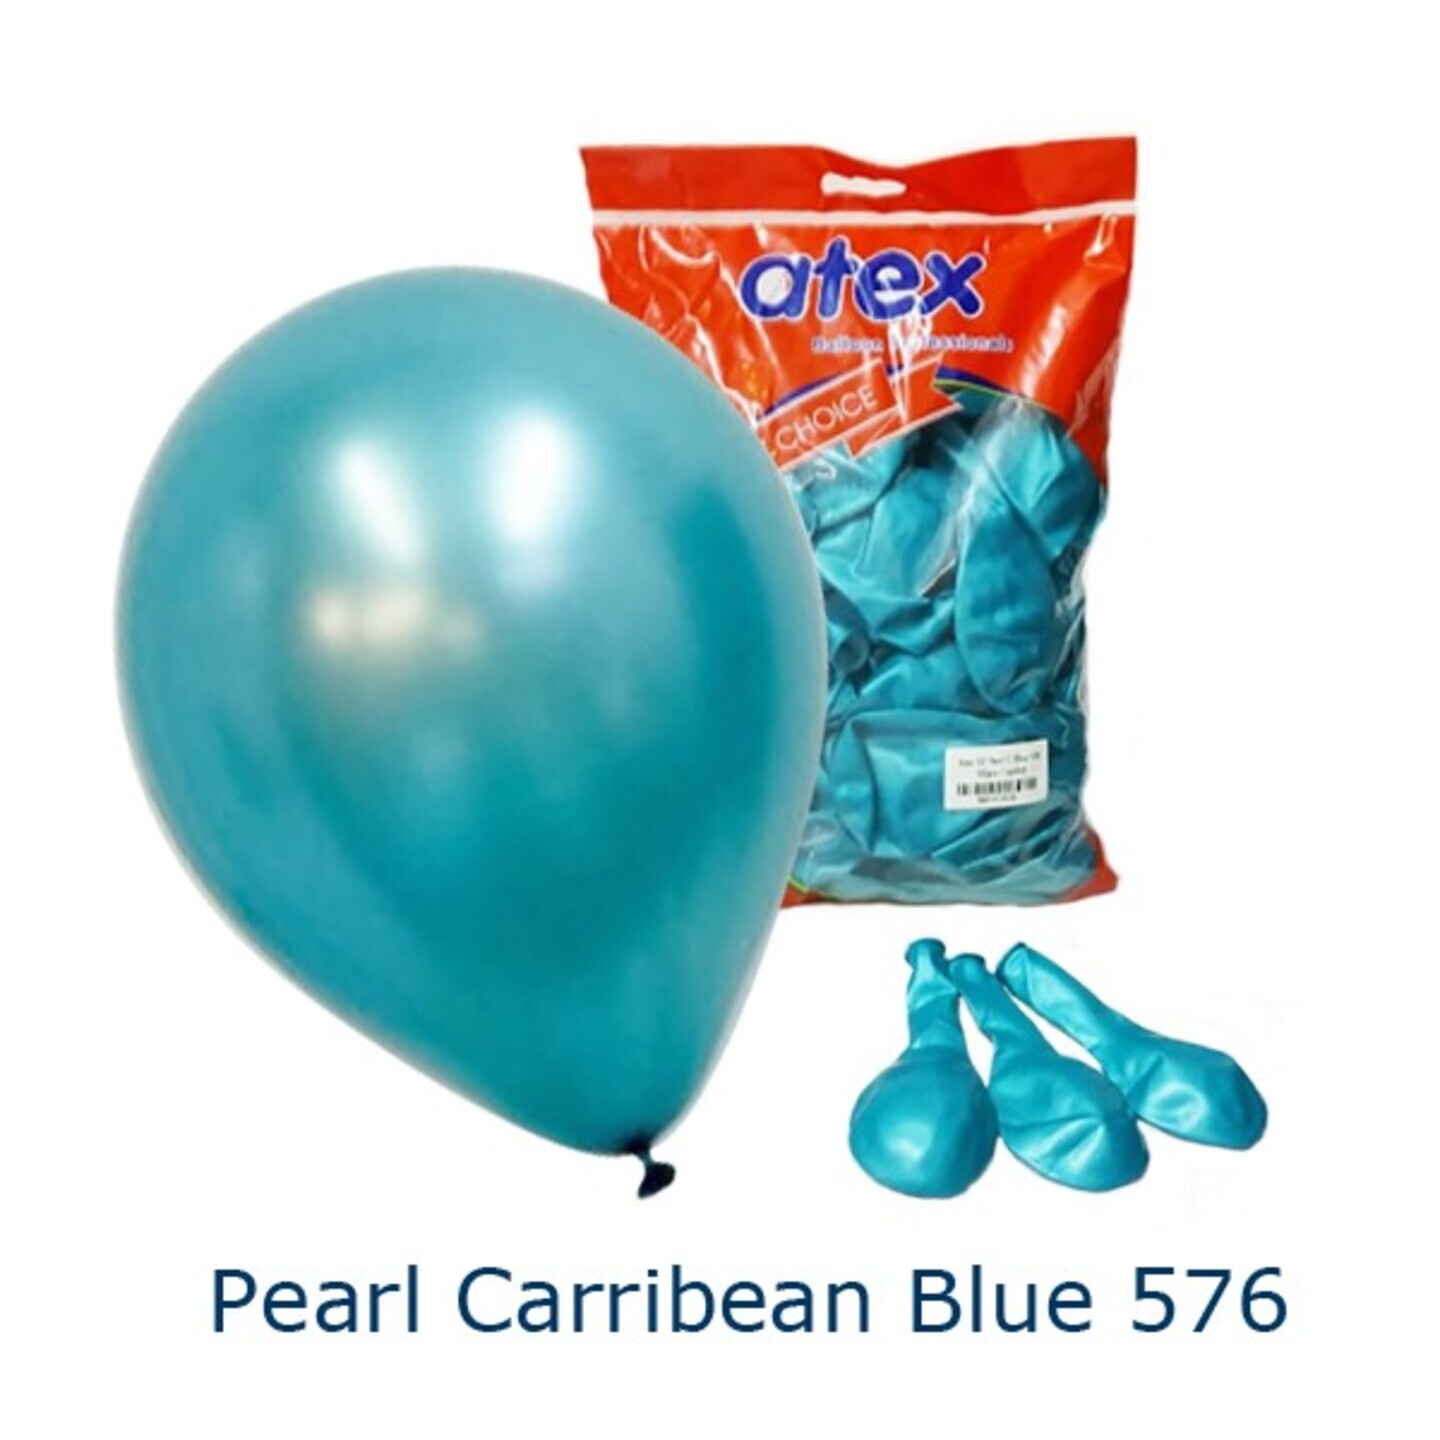 Pearl Caribbean Blue 576